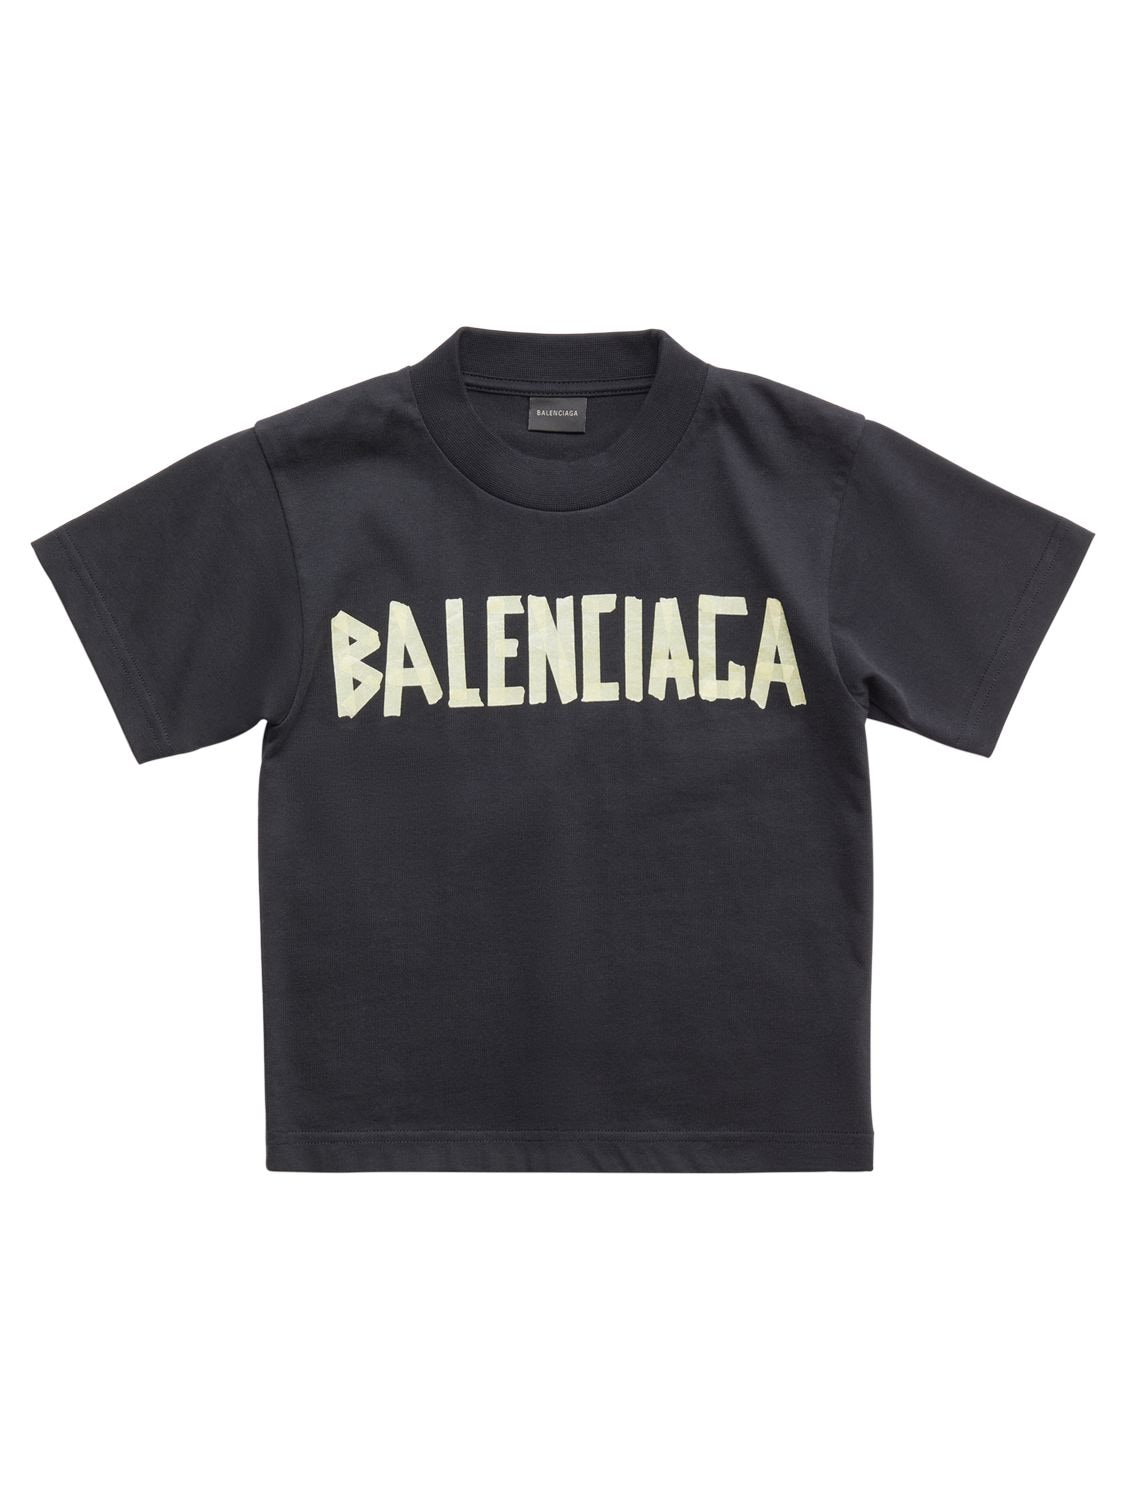 Balenciaga Kids' Cotton T-shirt In Washed Black